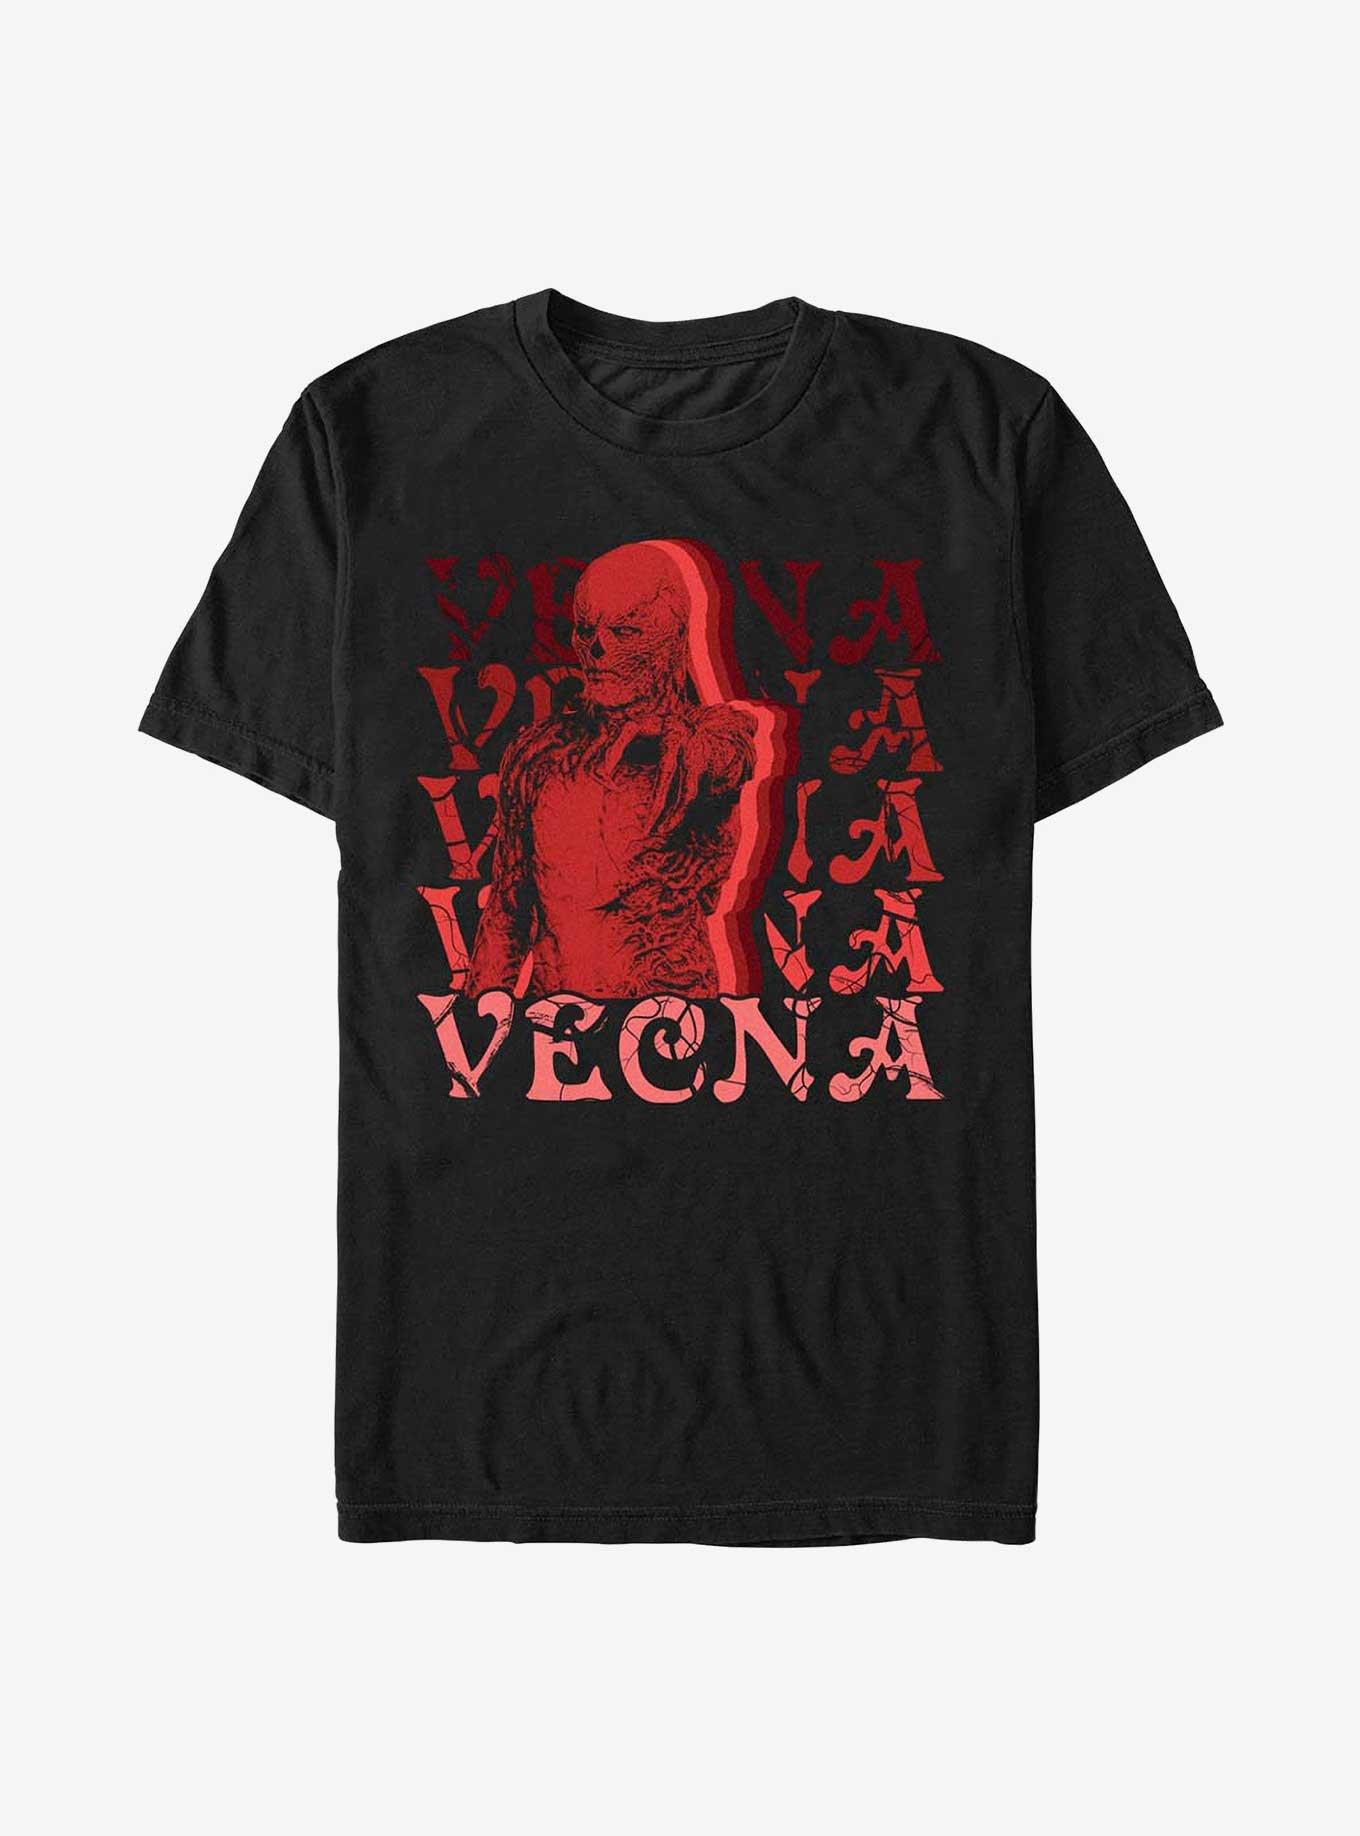 Stranger Things Vecna Wants You T-Shirt